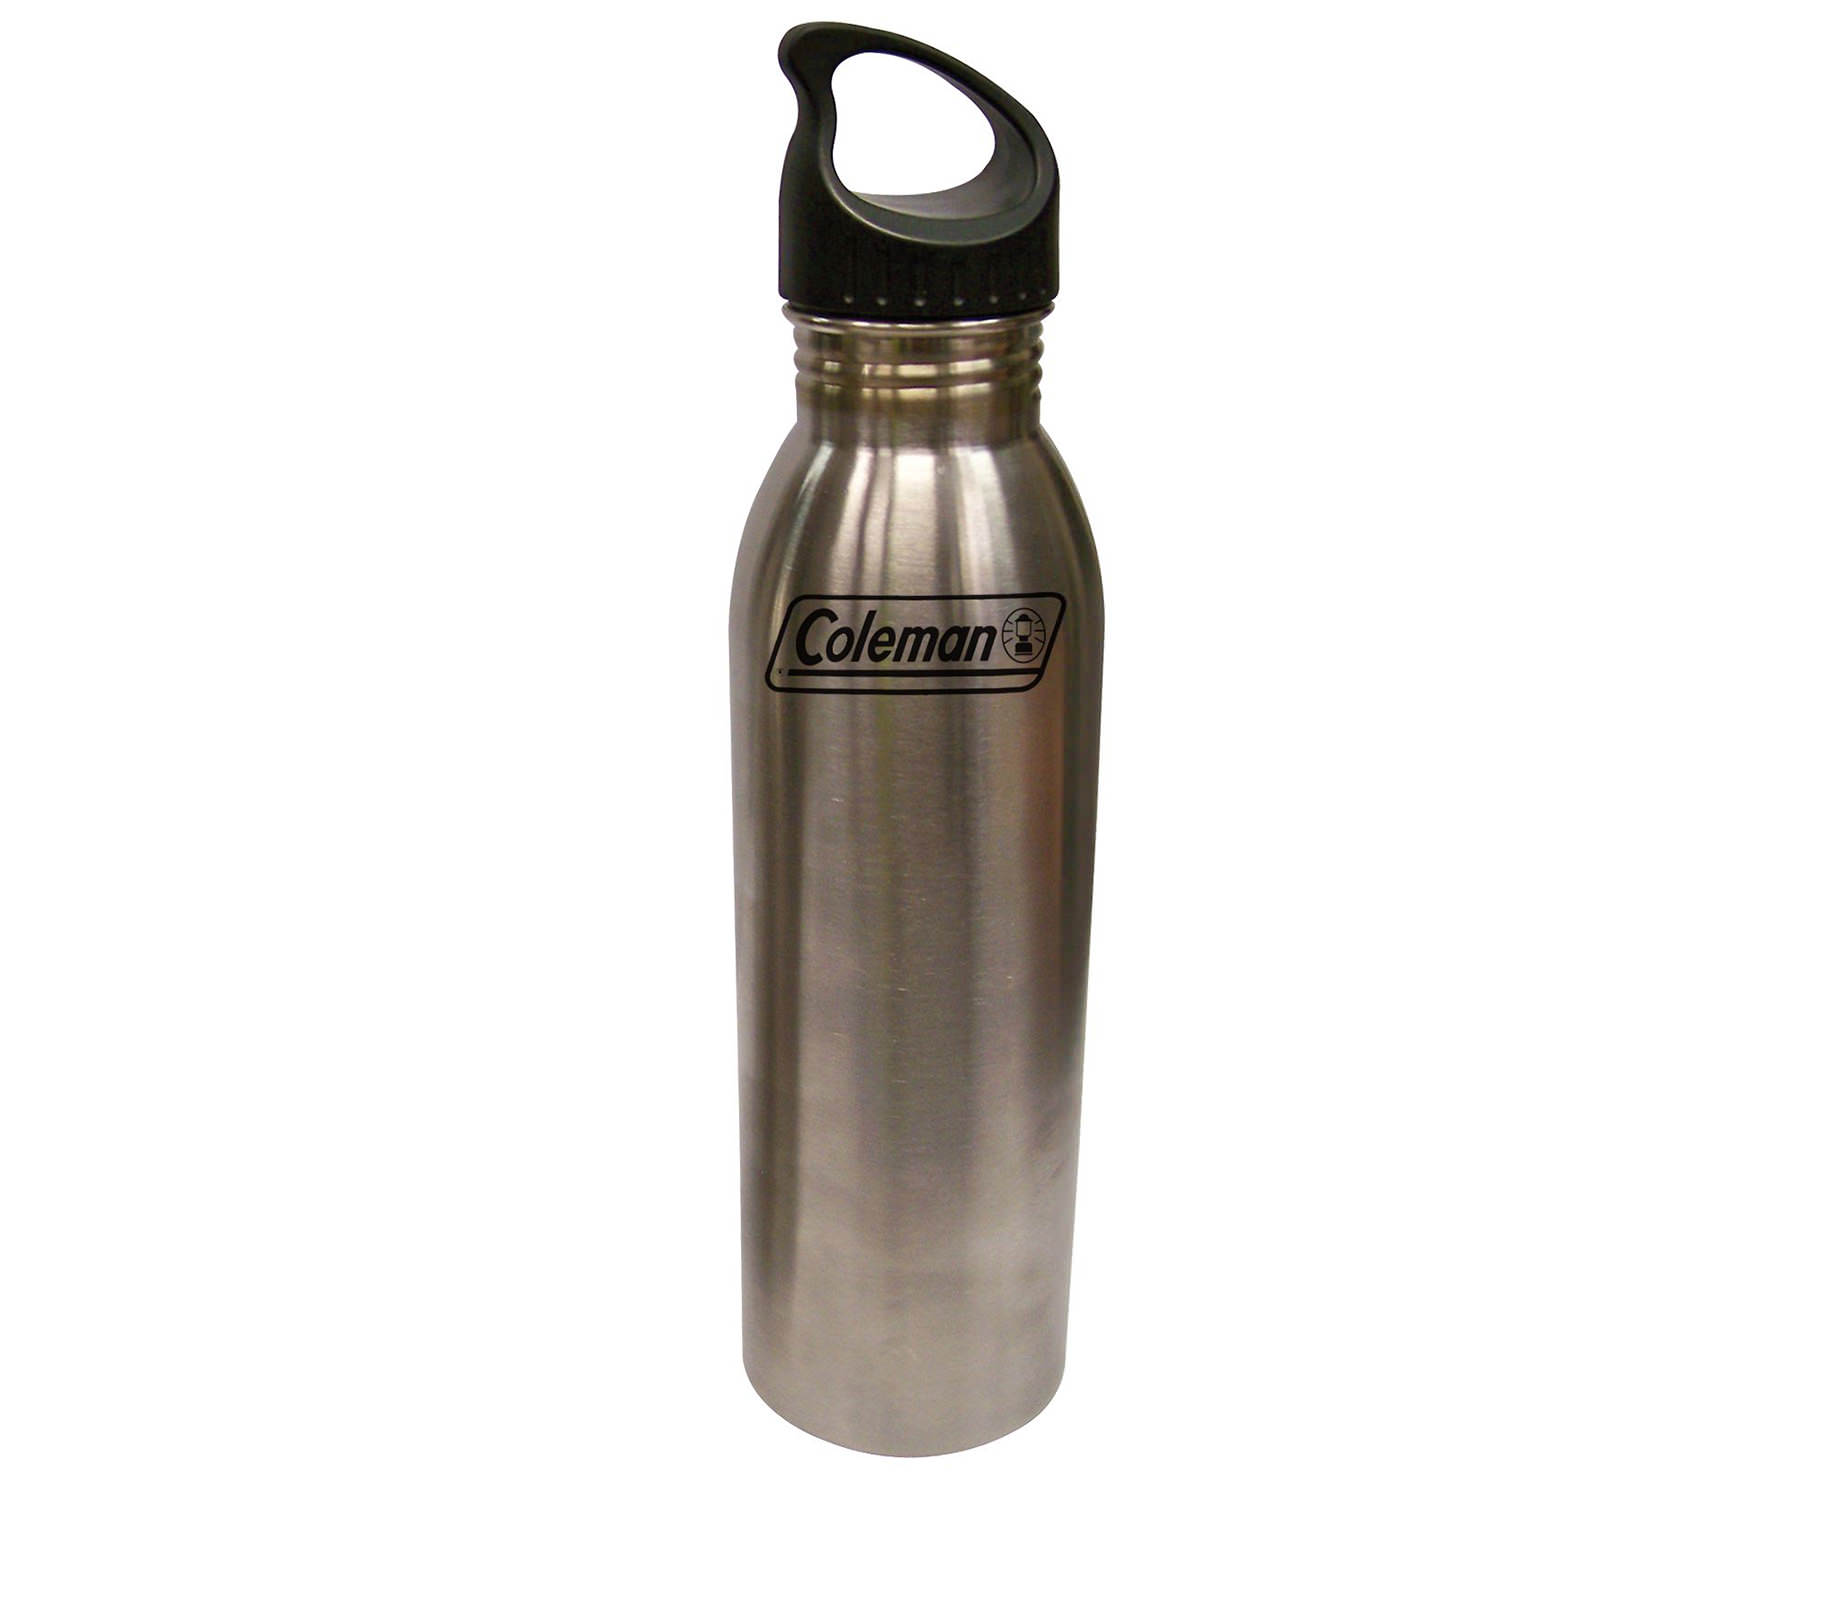 binh-nuoc-1l-coleman-stainless-steel-hydration-bottle-2000016359-7612-wetrek_vn